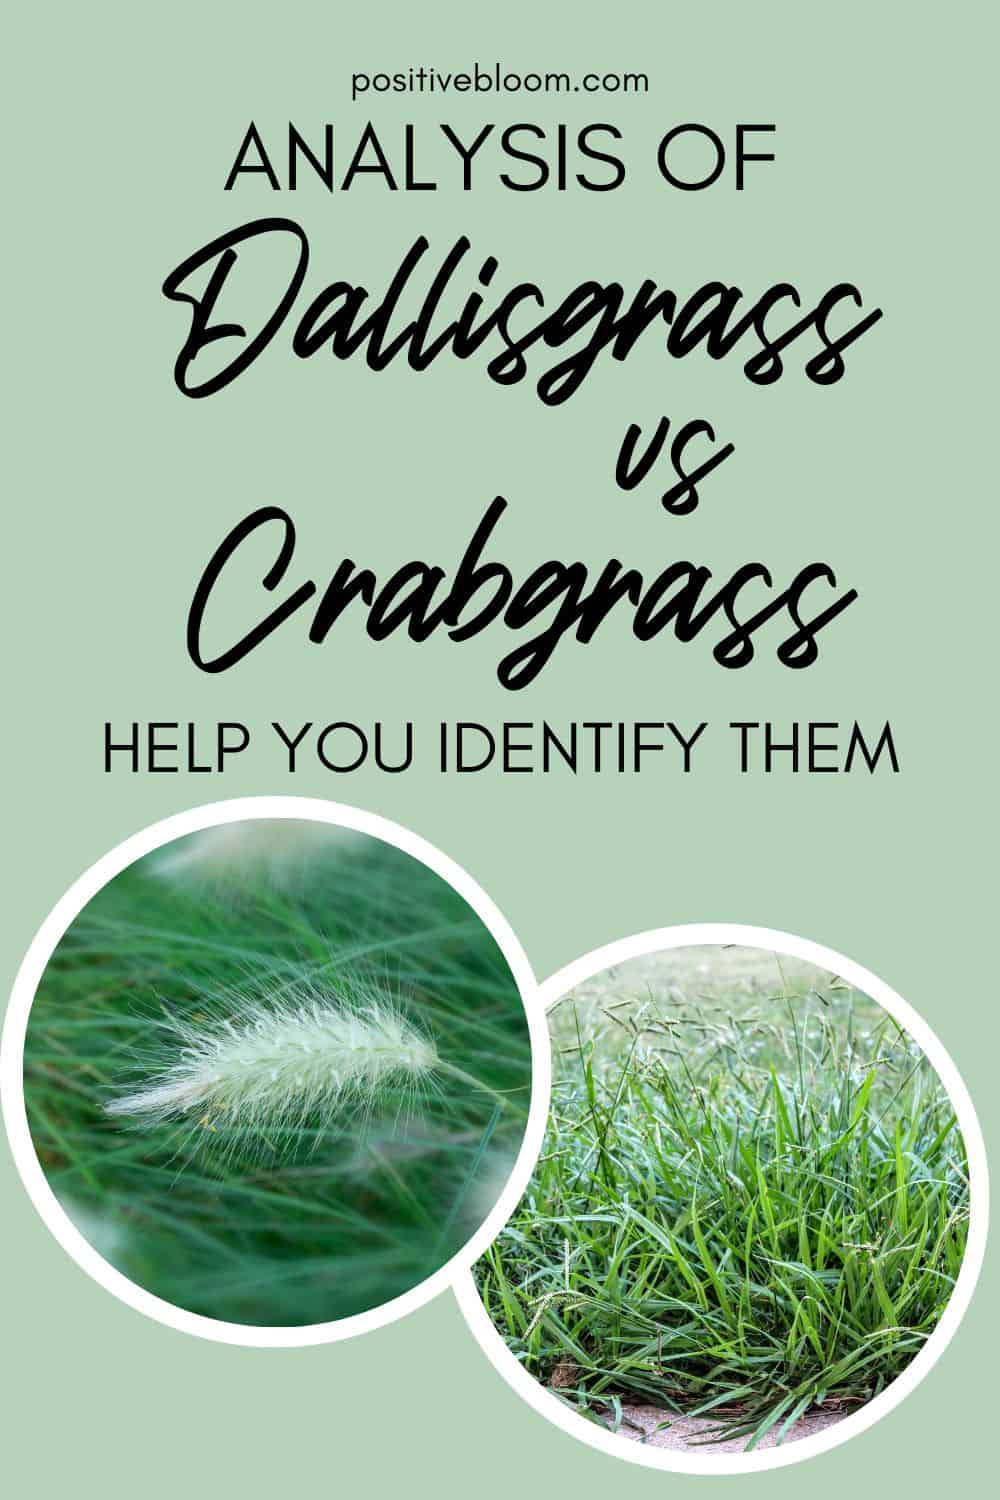 Analysis Of Dallisgrass vs Crabgrass To Help You Identify Them Pinterest